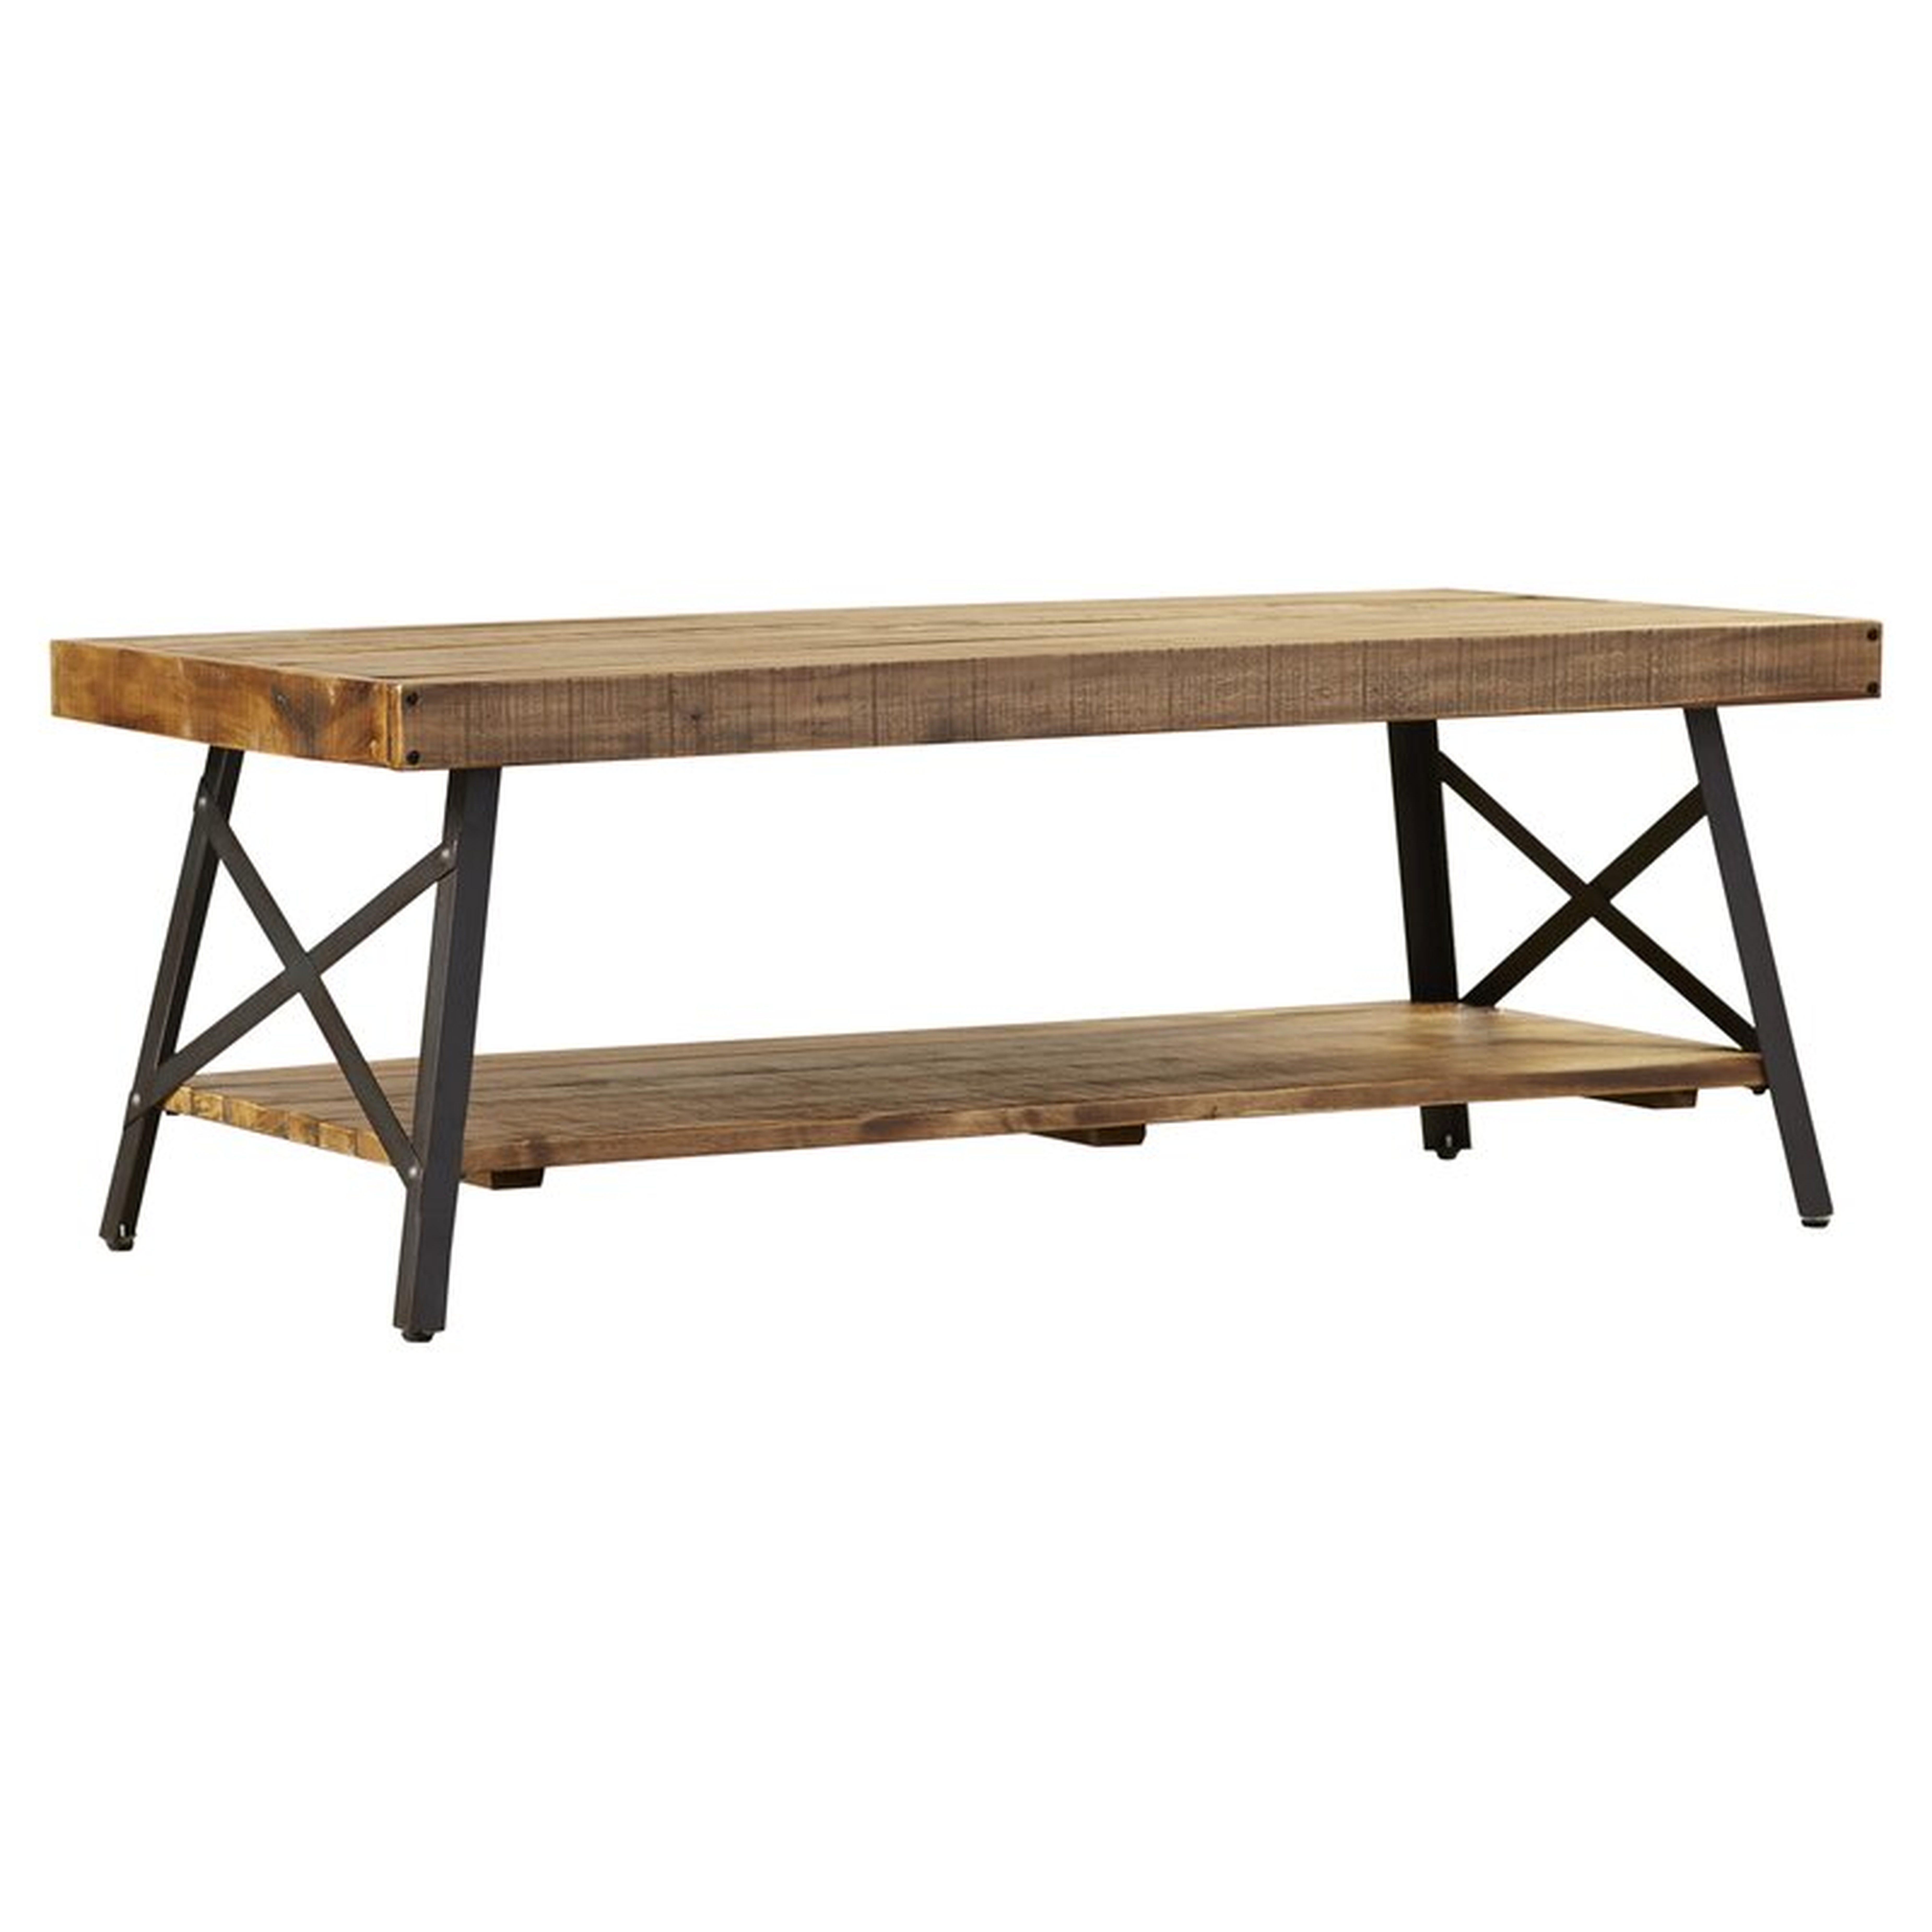 Laguna Solid Wood 4 Legs Coffee Table with Storage, Natural Pine Brown - Wayfair